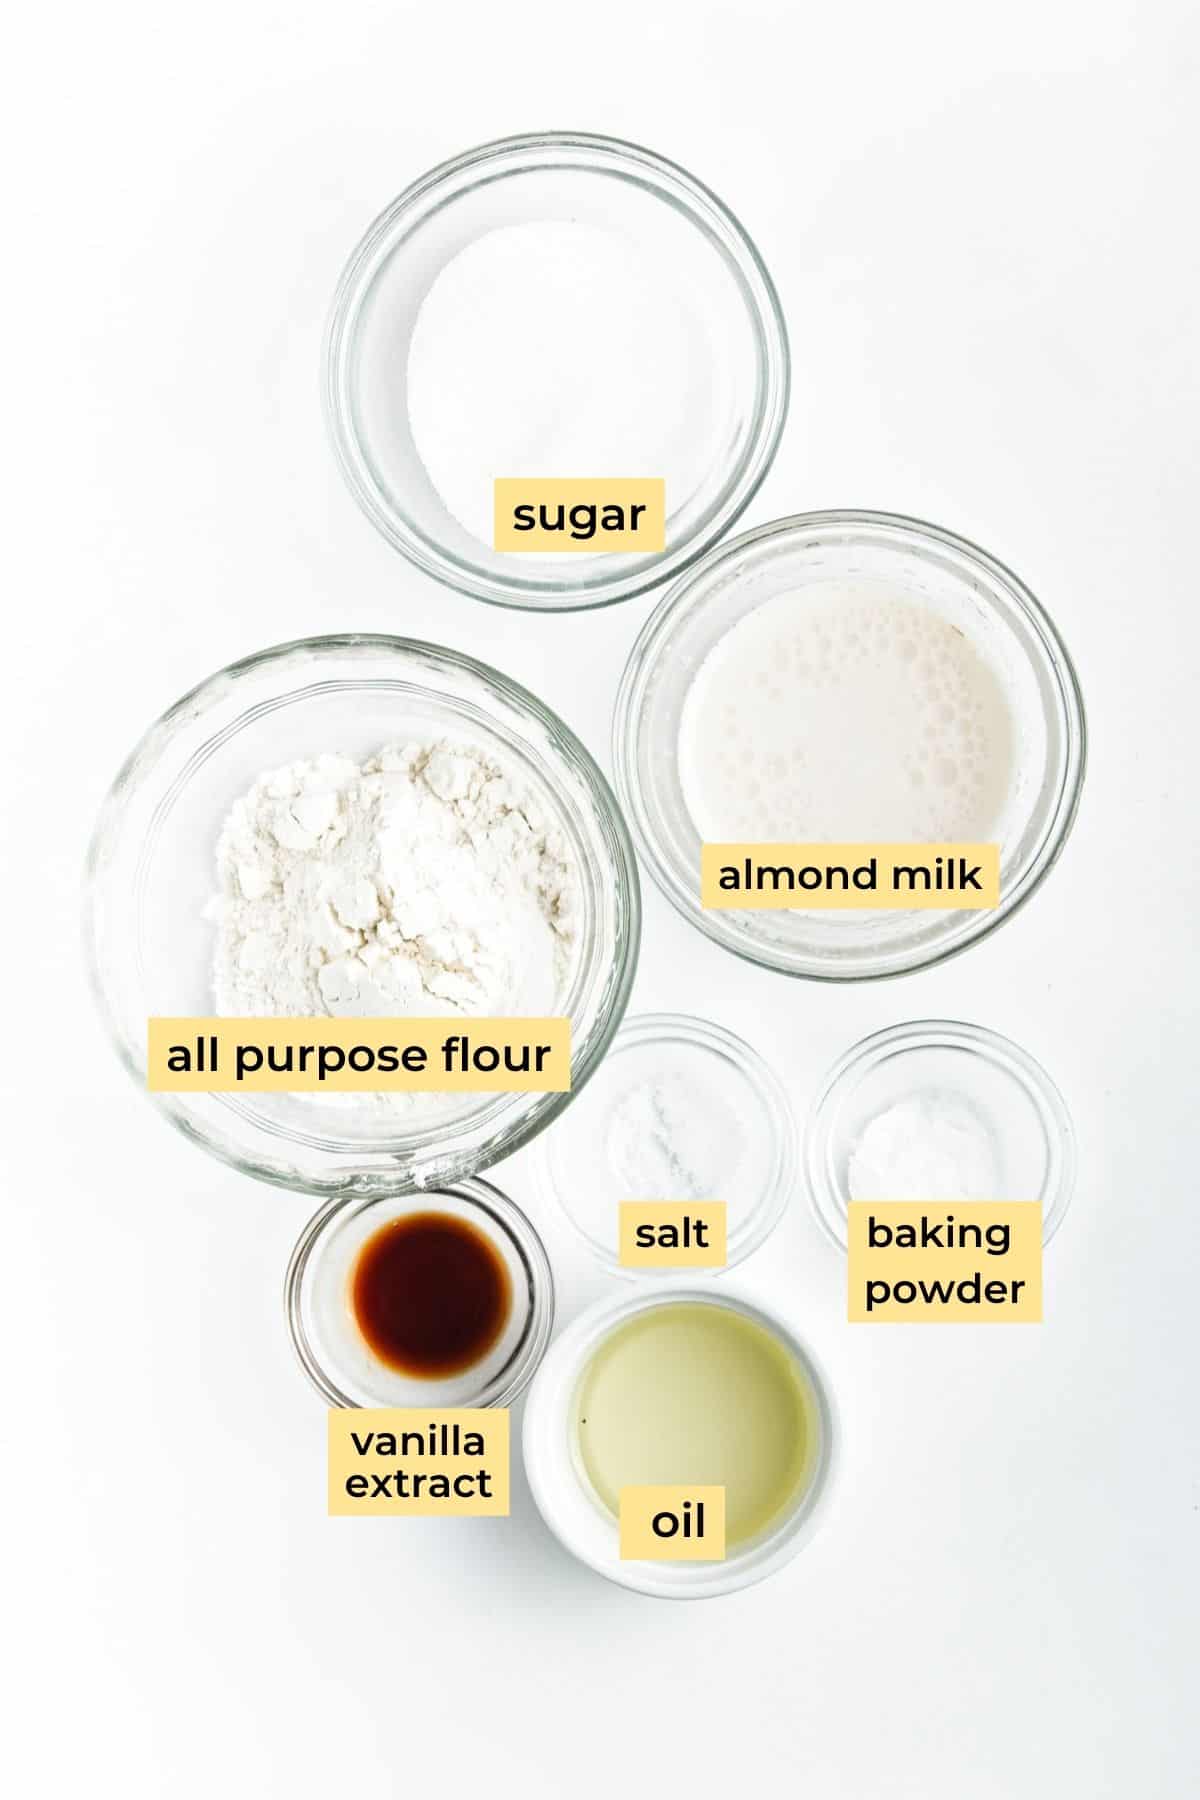 Vanilla mug cake ingredients: sugar, all purpose flour, almond milk, vanilla extract, oil, baking powder and salt.